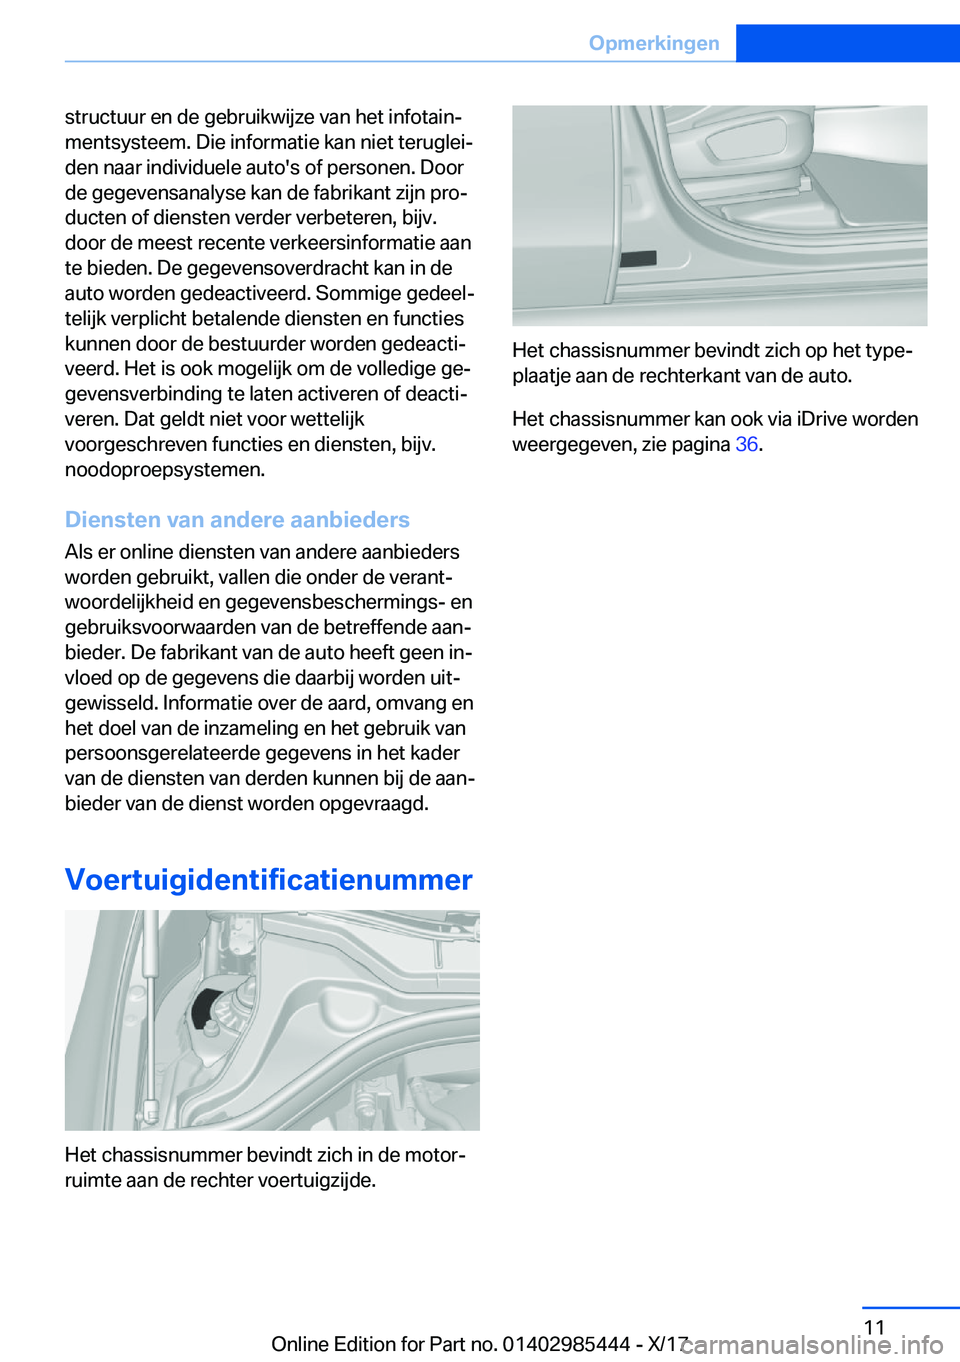 BMW X1 2018  Instructieboekjes (in Dutch) �s�t�r�u�c�t�u�u�r� �e�n� �d�e� �g�e�b�r�u�i�k�w�i�j�z�e� �v�a�n� �h�e�t� �i�n�f�o�t�a�i�nj
�m�e�n�t�s�y�s�t�e�e�m�.� �D�i�e� �i�n�f�o�r�m�a�t�i�e� �k�a�n� �n�i�e�t� �t�e�r�u�g�l�e�ij
�d�e�n� �n�a�a